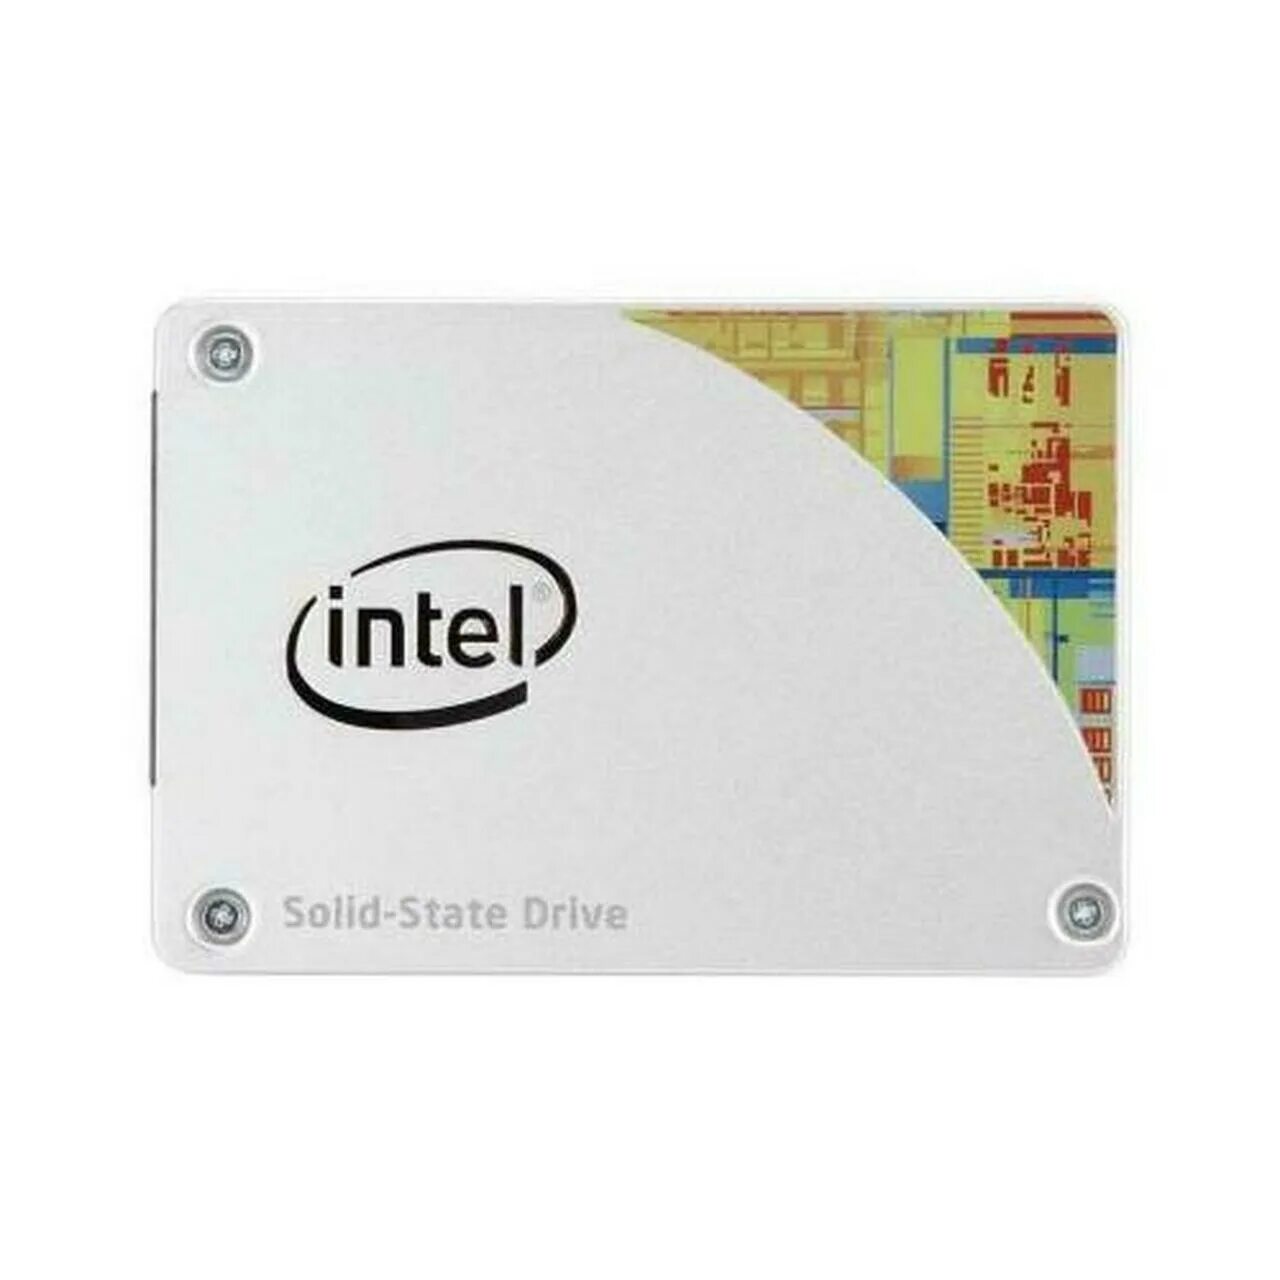 Intel SSD 535 Series. Intel ssdsc2bw240h6. Твердотельный накопитель AFOX afsn713bw240g. SSD Pro 1500 Series 180gb Nix. Intel series гб